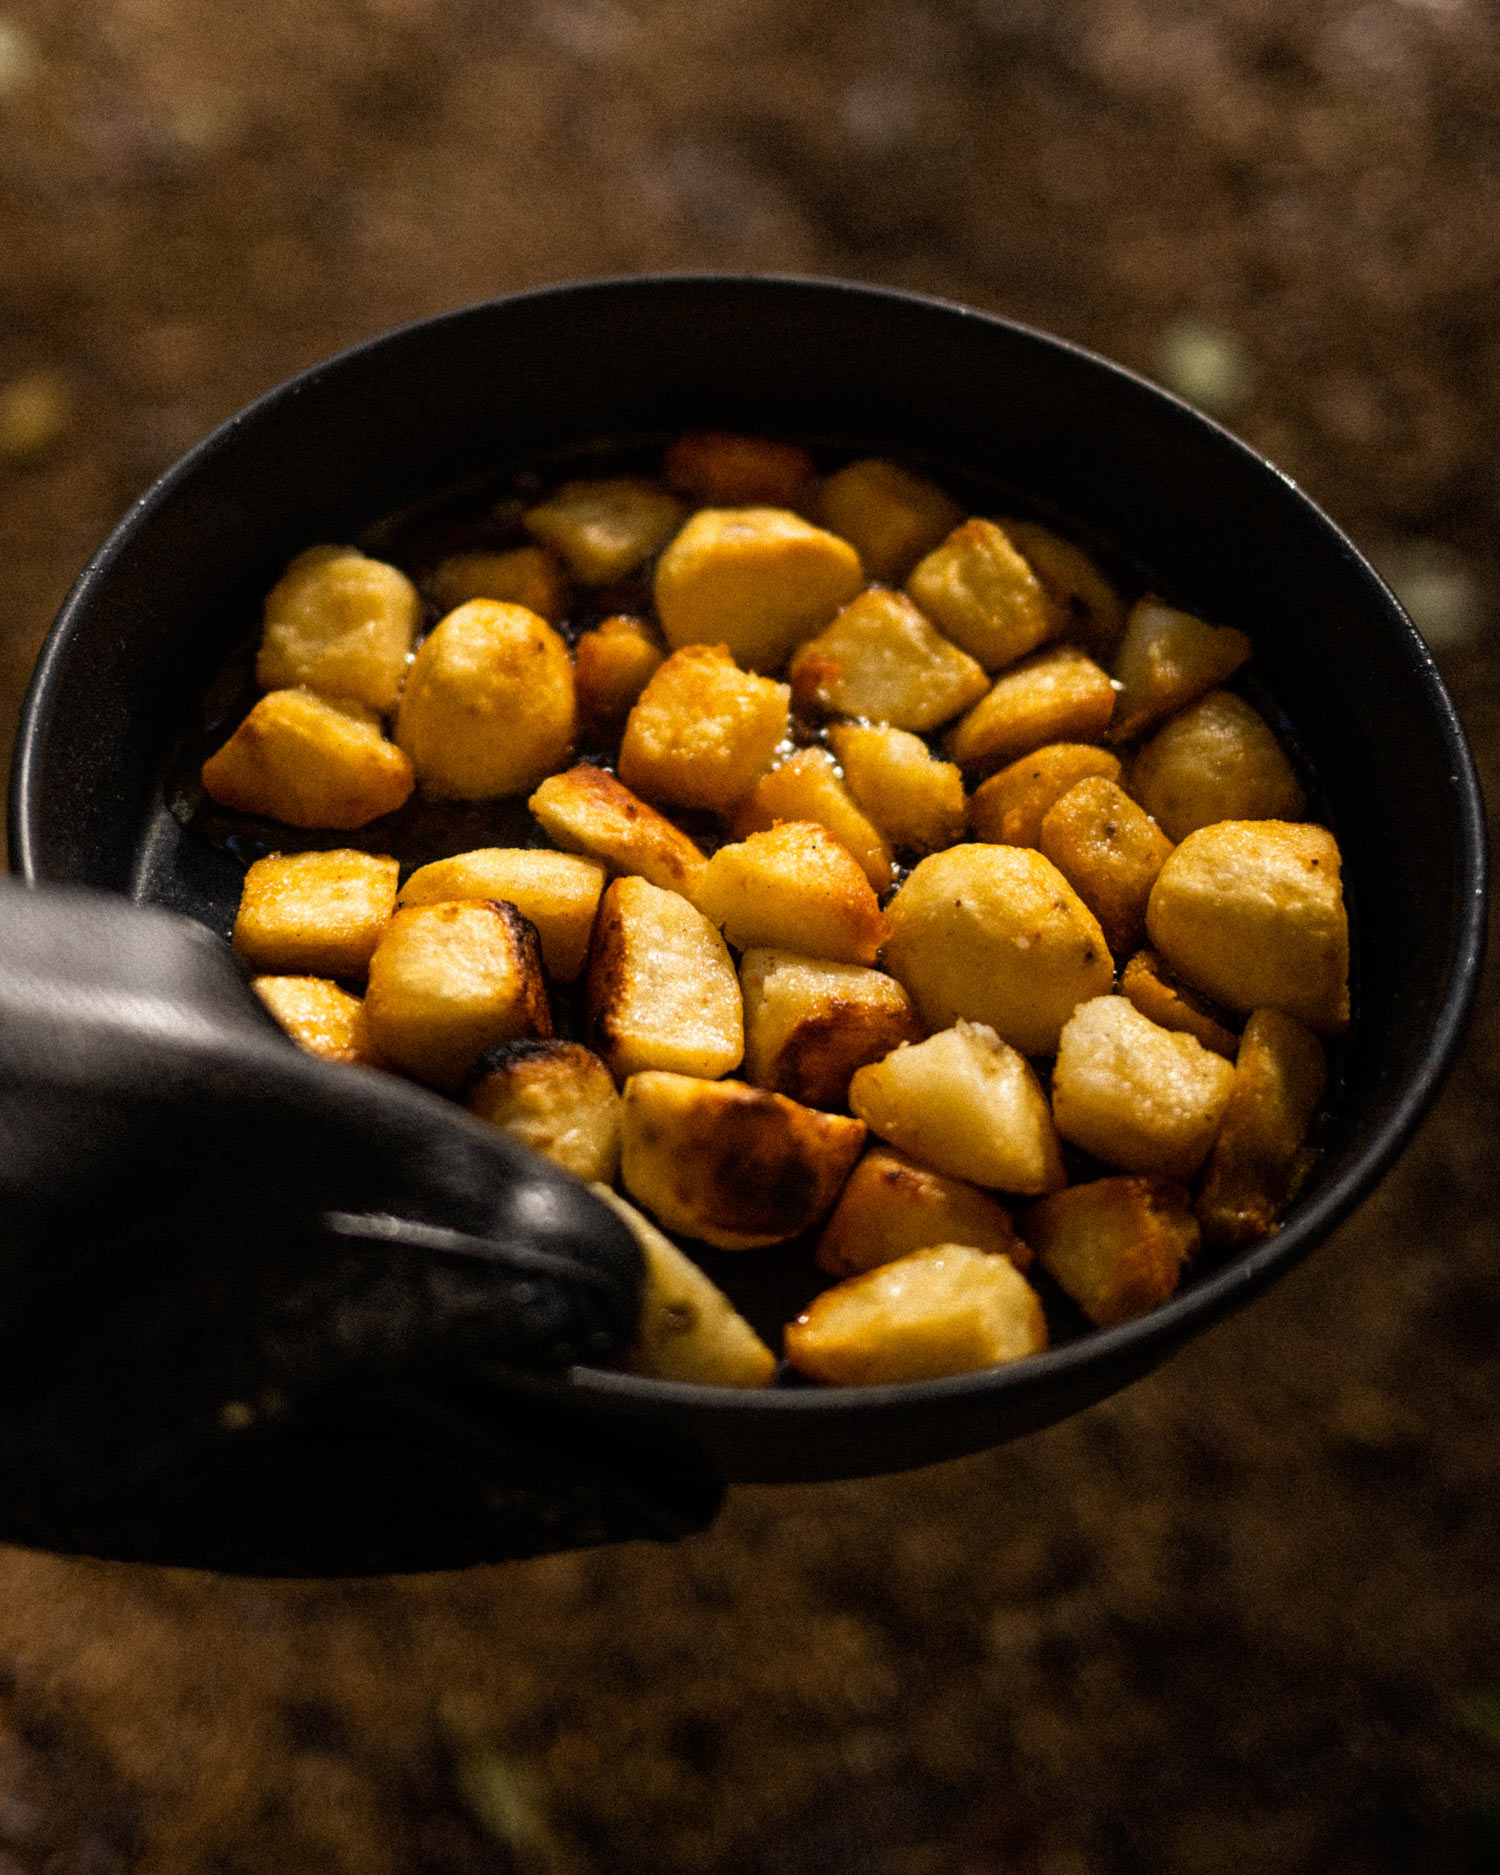 roast the potatoes